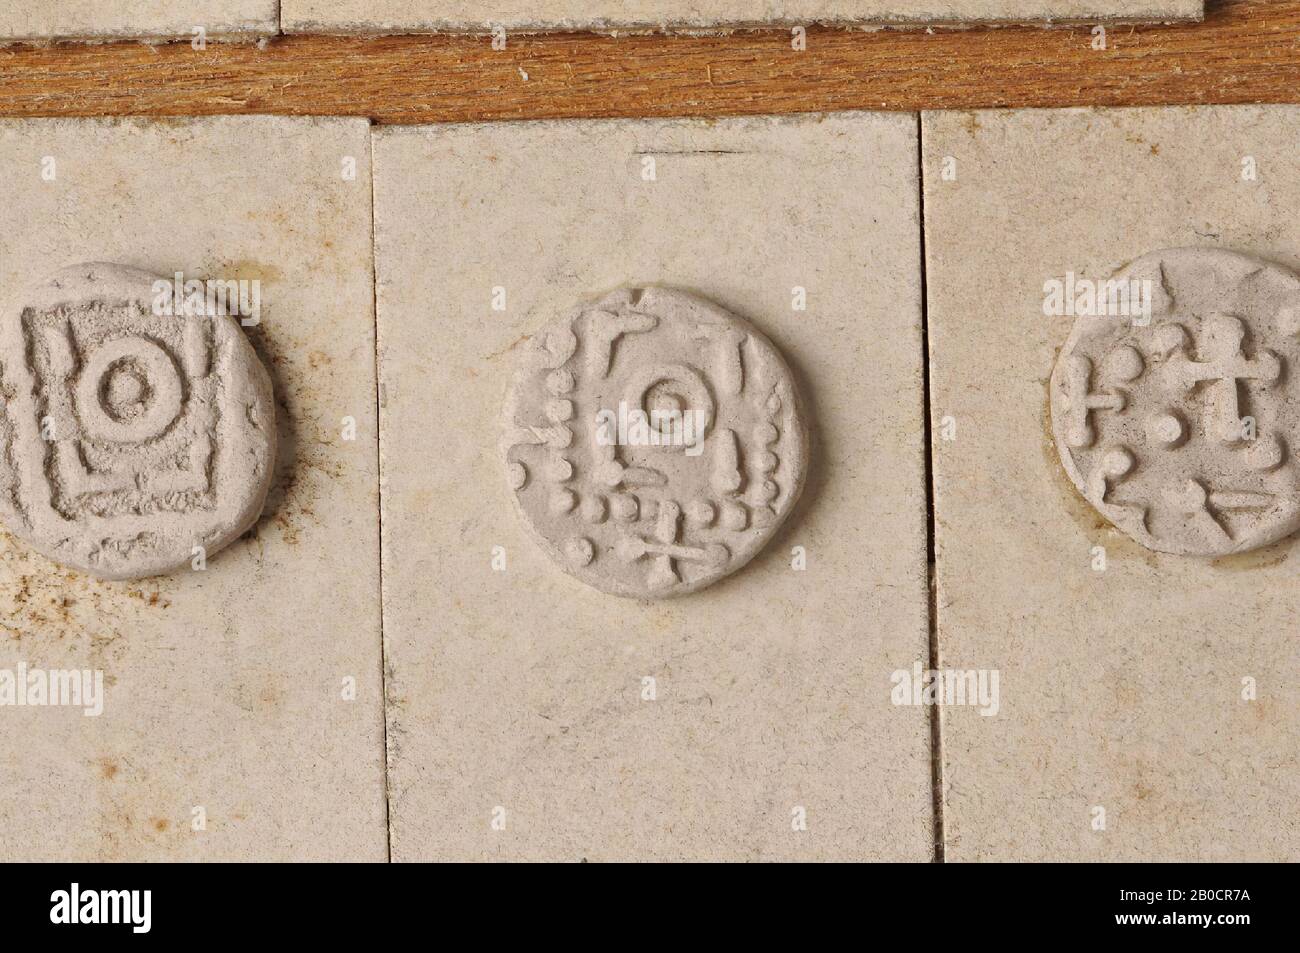 Antiquity reception, coin imprint, plaster, Vindplaats, the Netherlands Stock Photo